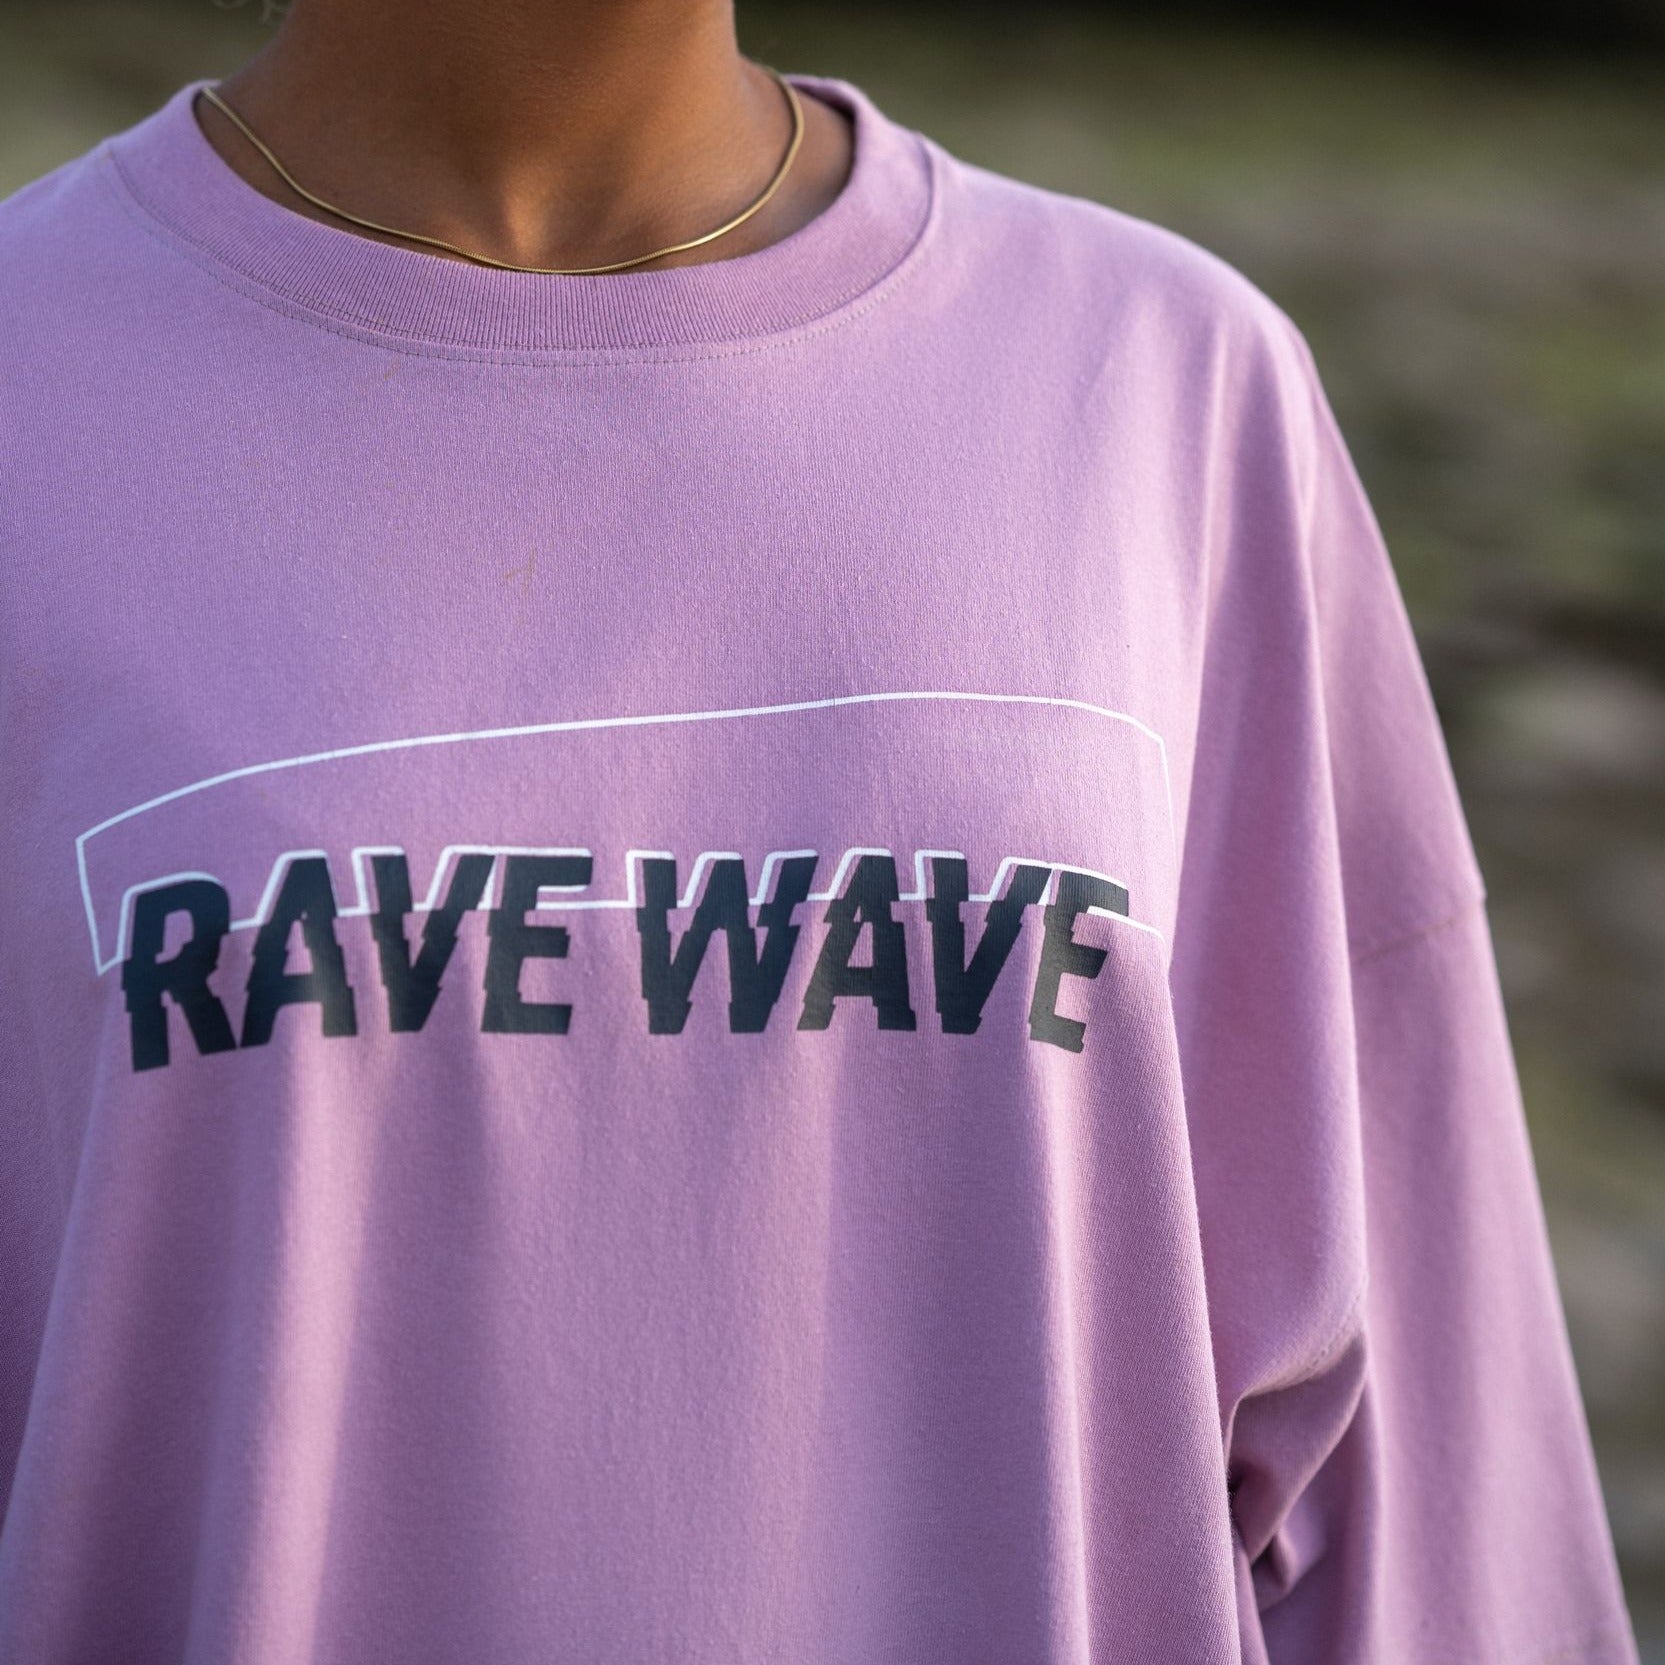 Ninefoot Studio Rave wave oversize T-shirt in lilac| T-shirt